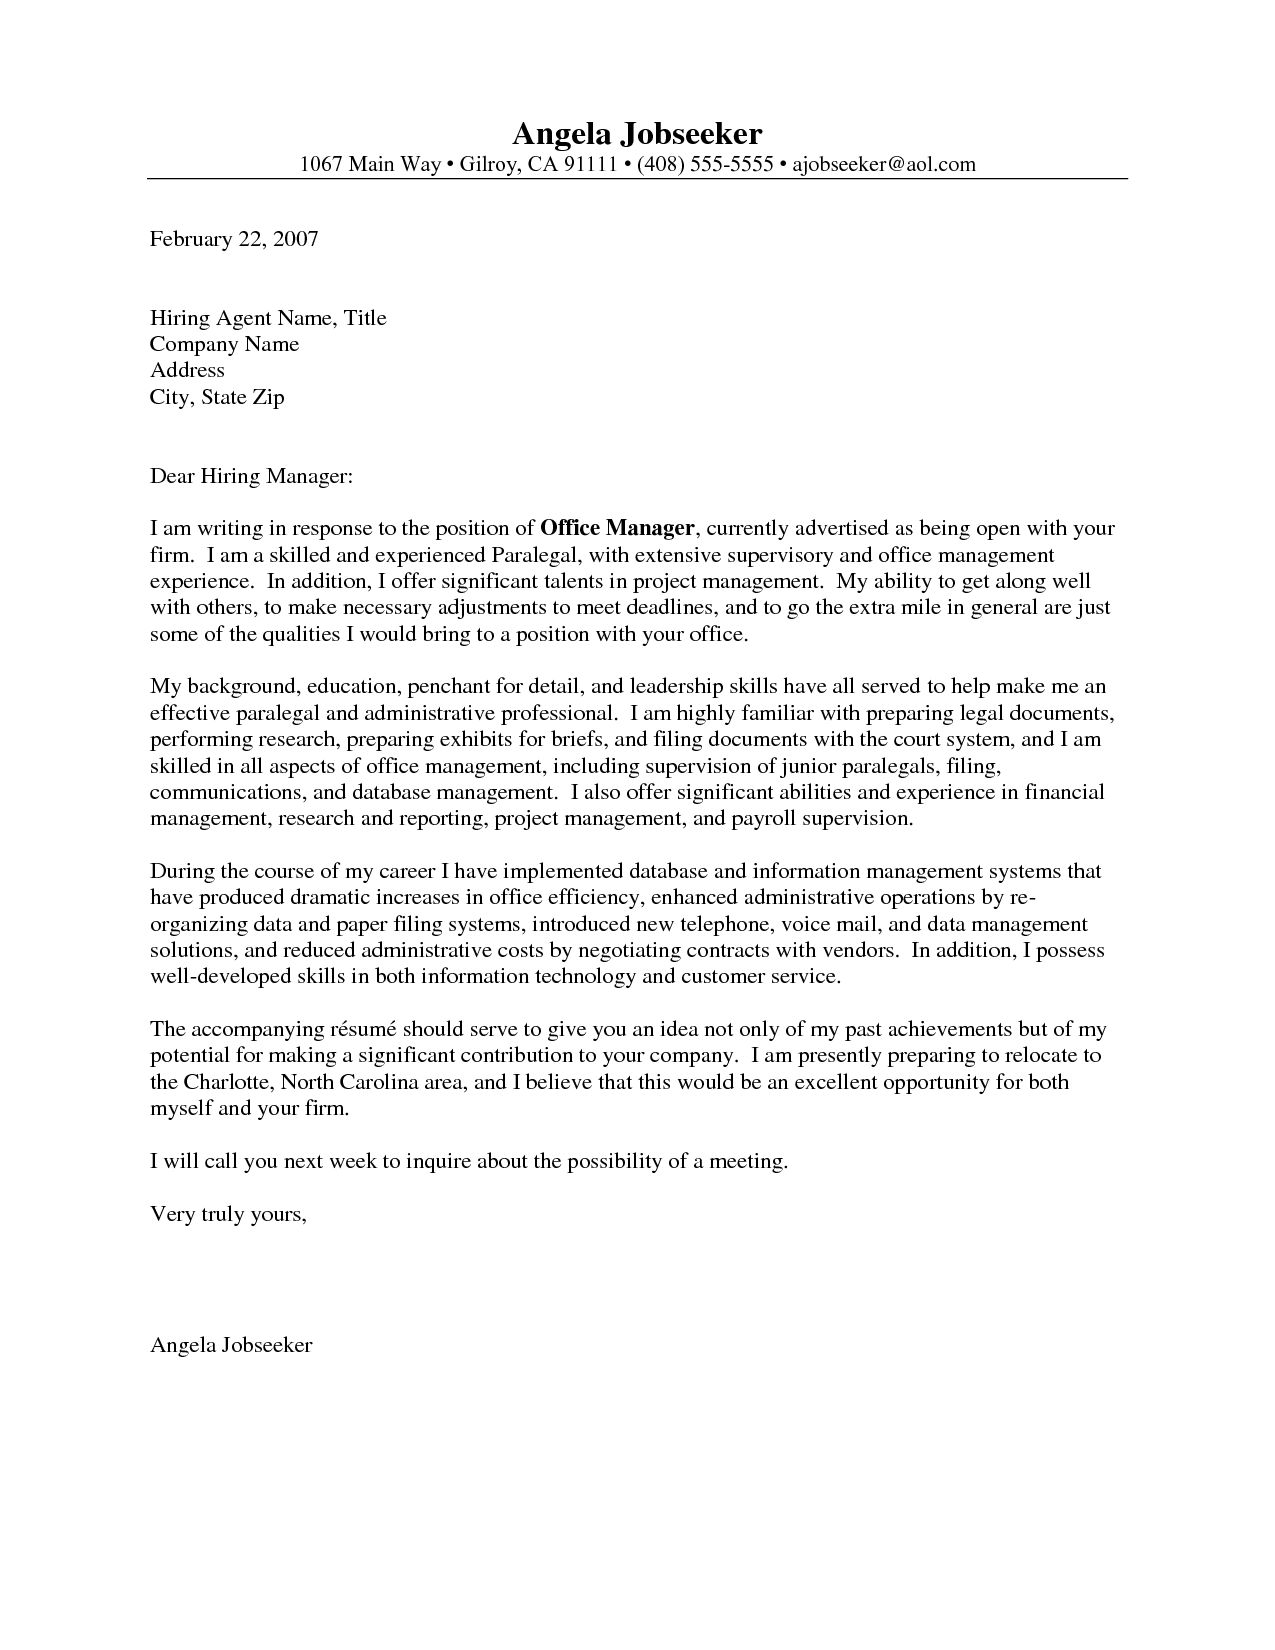 Cover Letter Template Harvard  